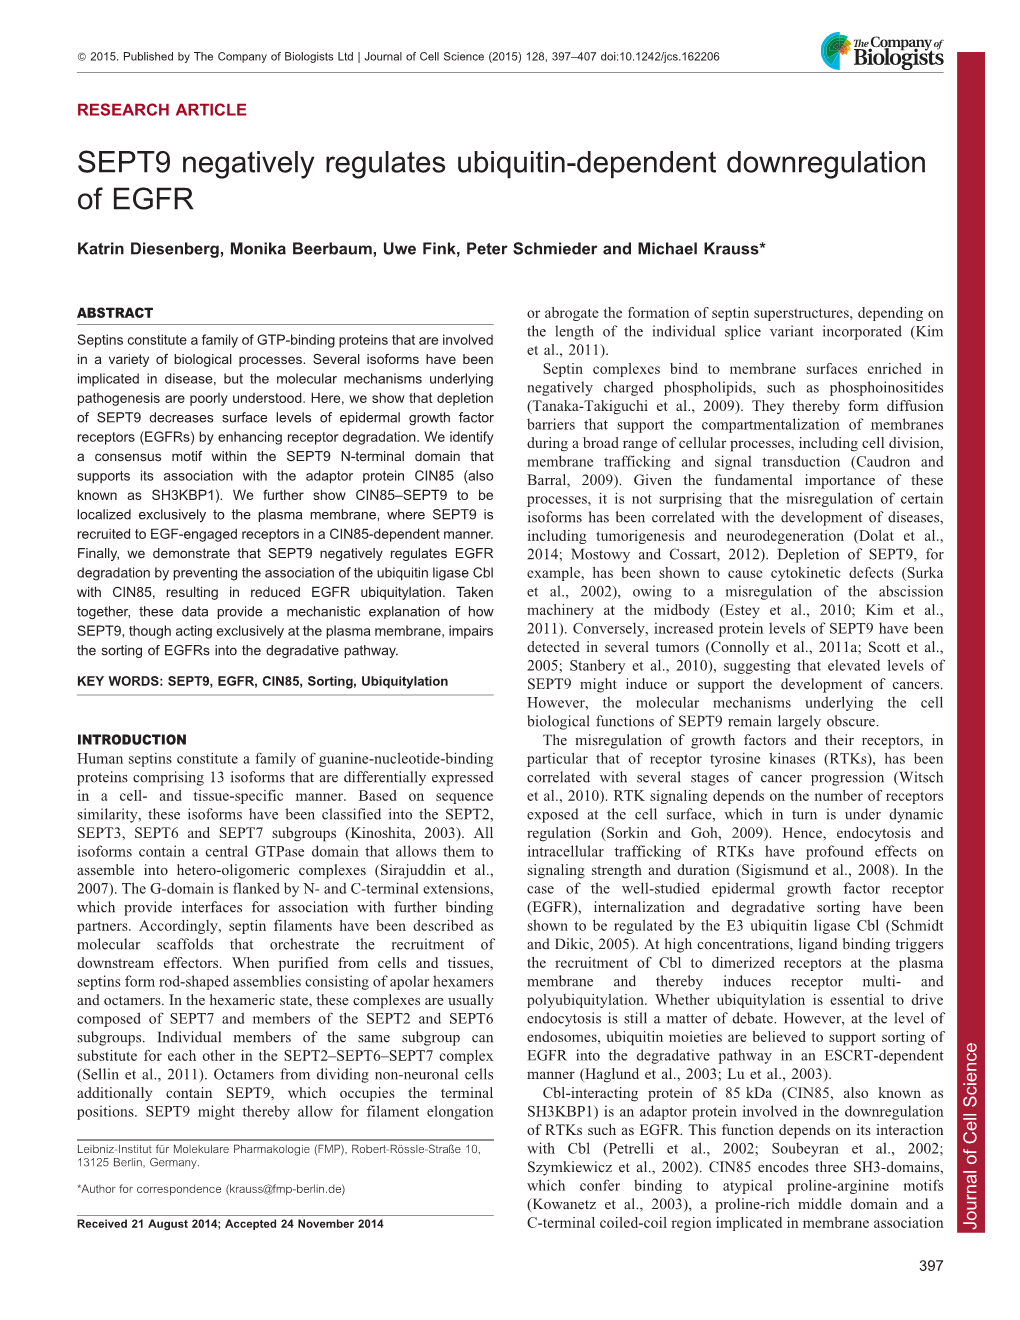 SEPT9 Negatively Regulates Ubiquitin-Dependent